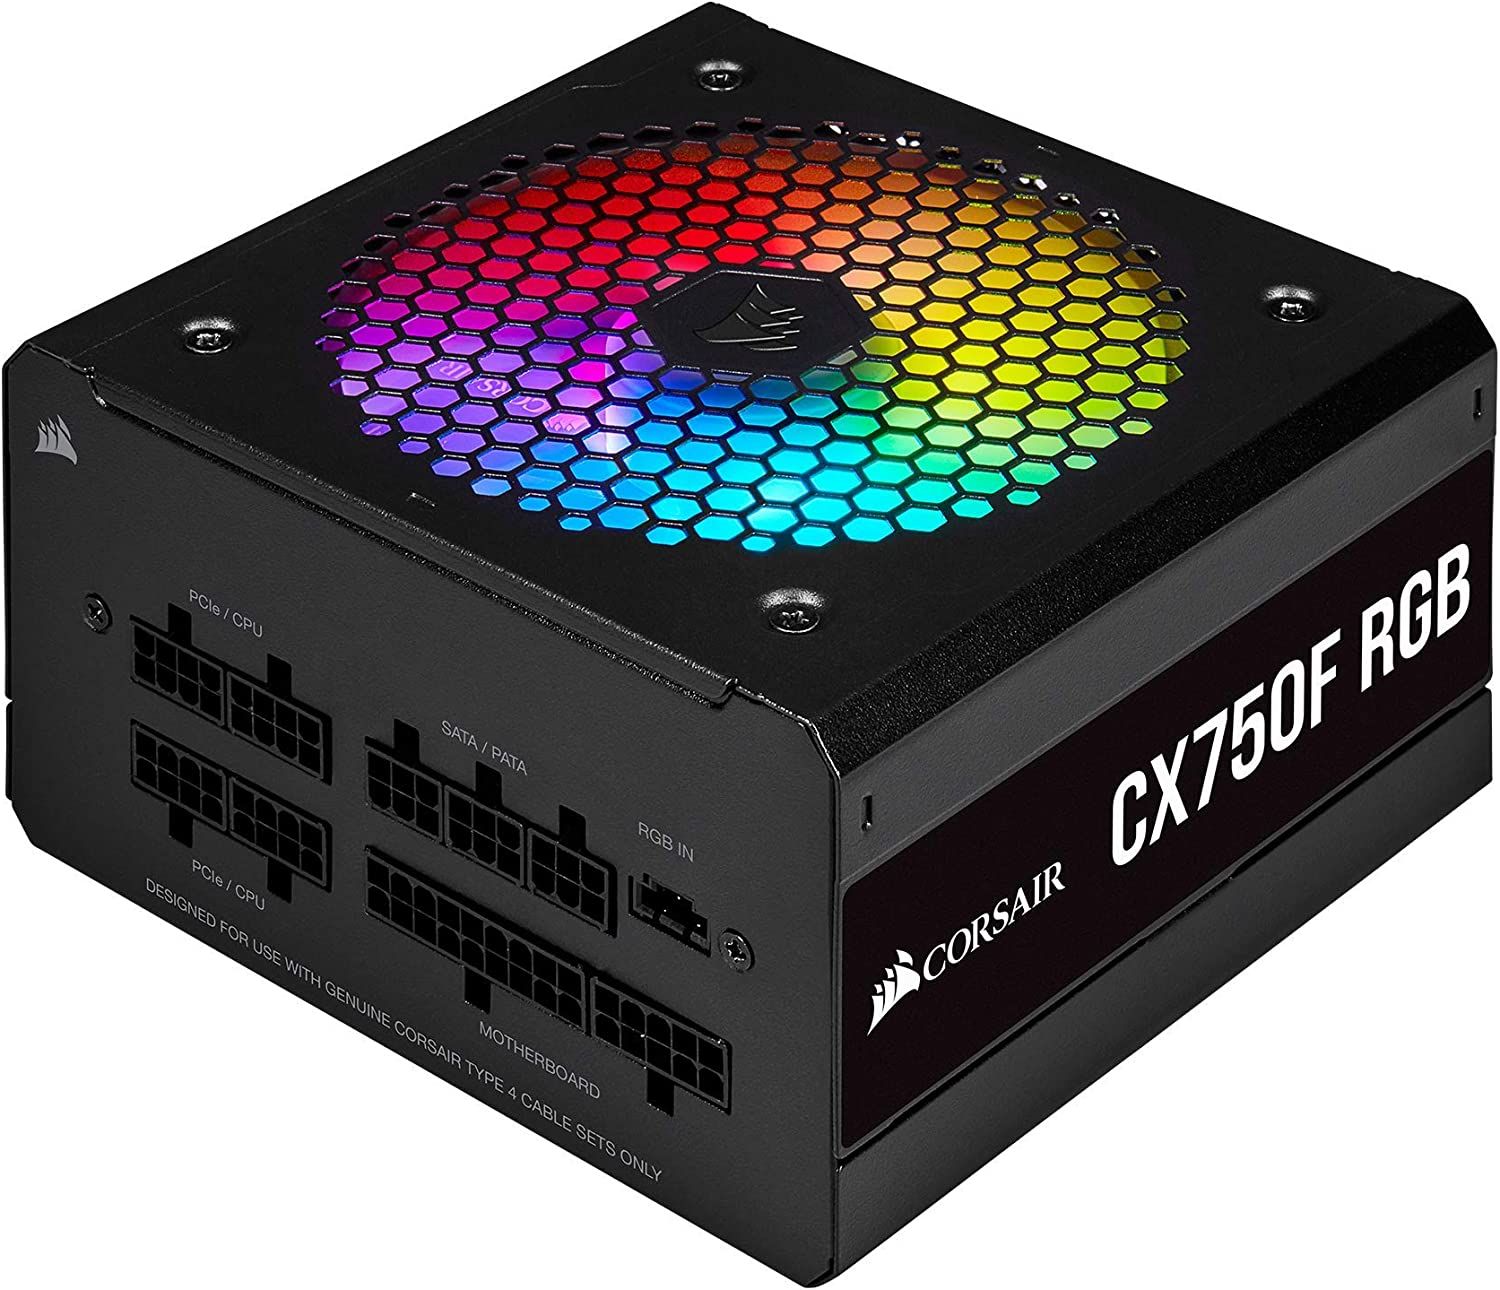 Corsair CX750F RGB